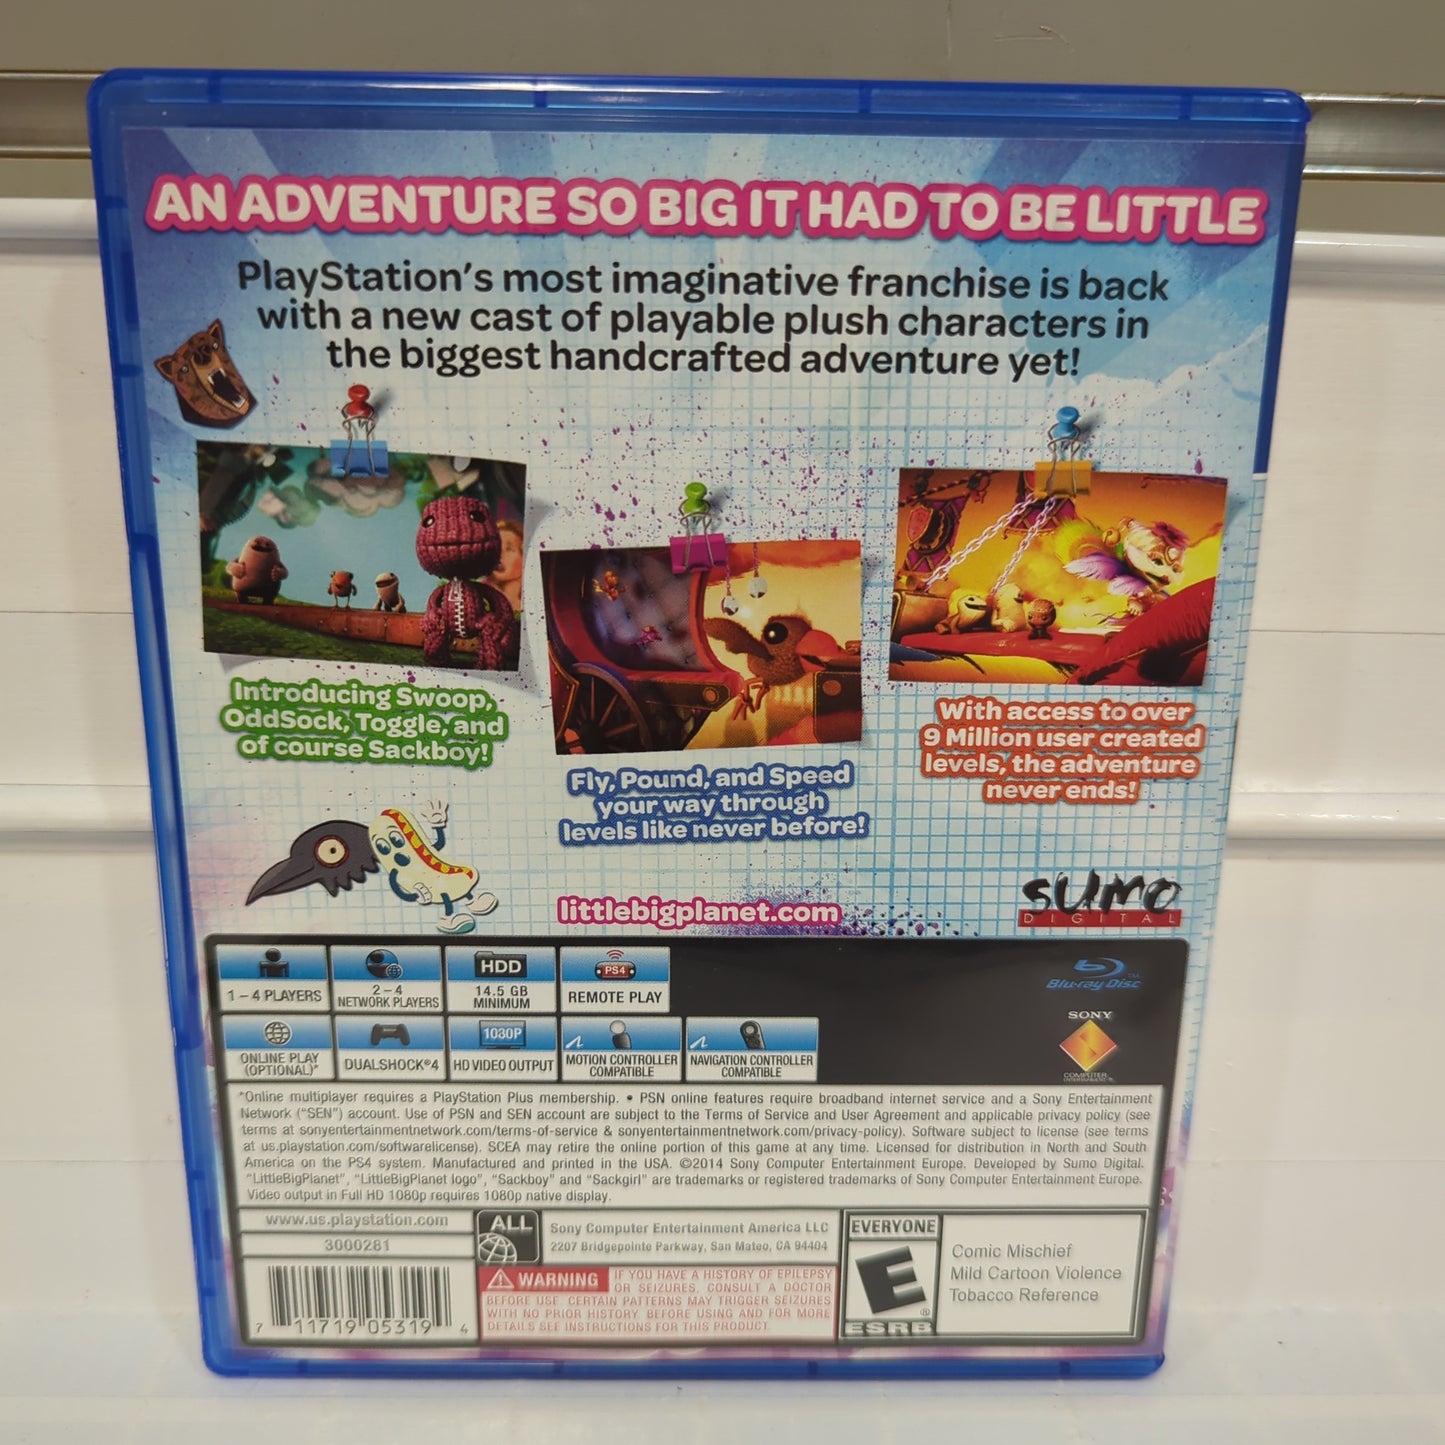 LittleBigPlanet 3 - Playstation 4